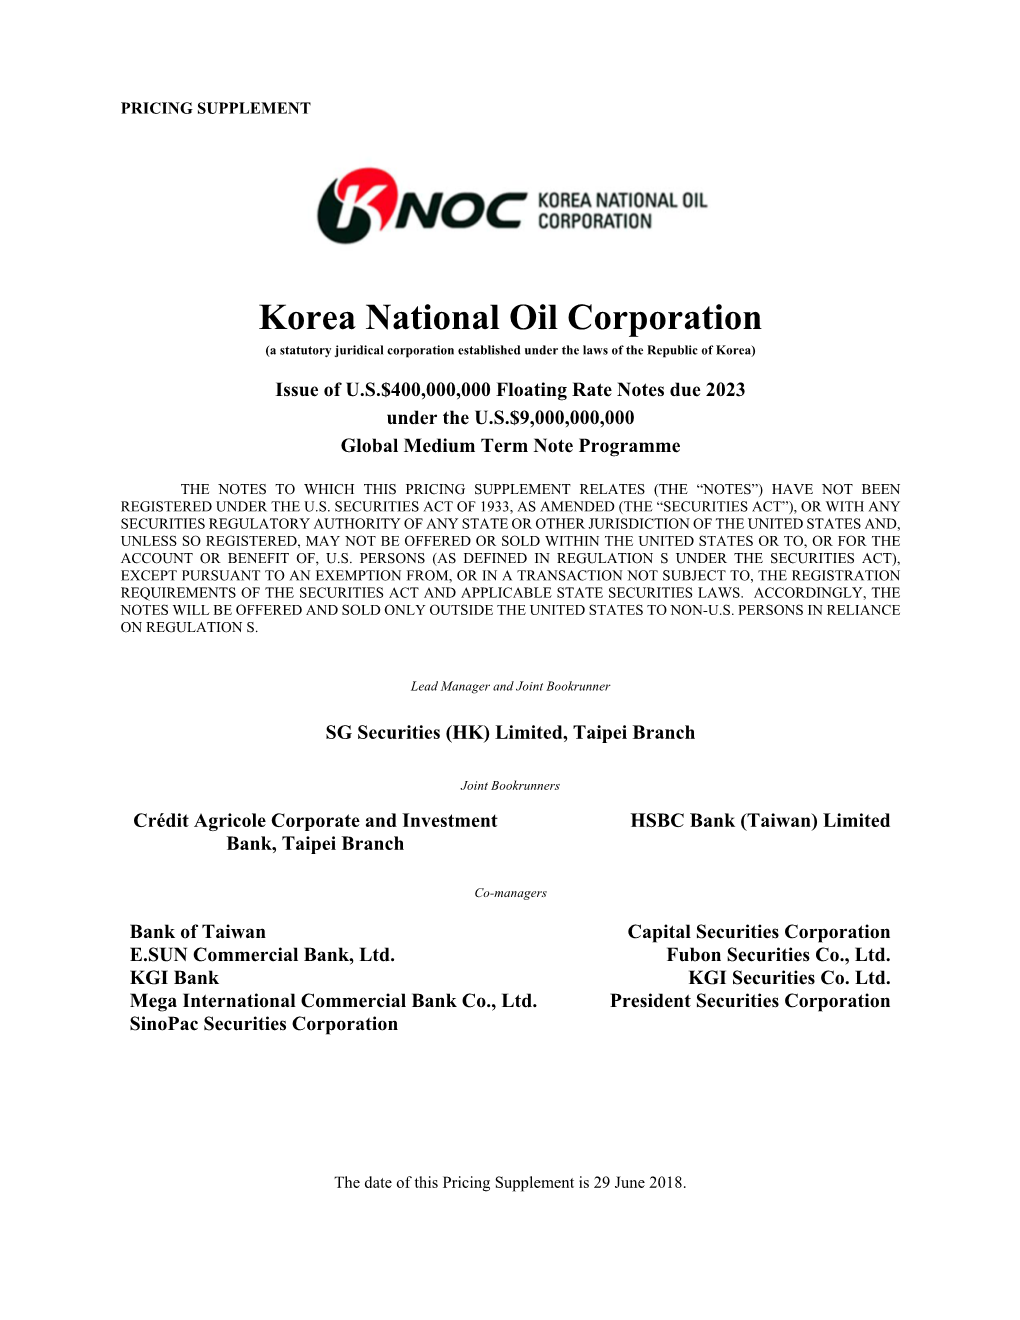 Korea National Oil Corporation (A Statutory Juridical Corporation Established Under the Laws of the Republic of Korea)